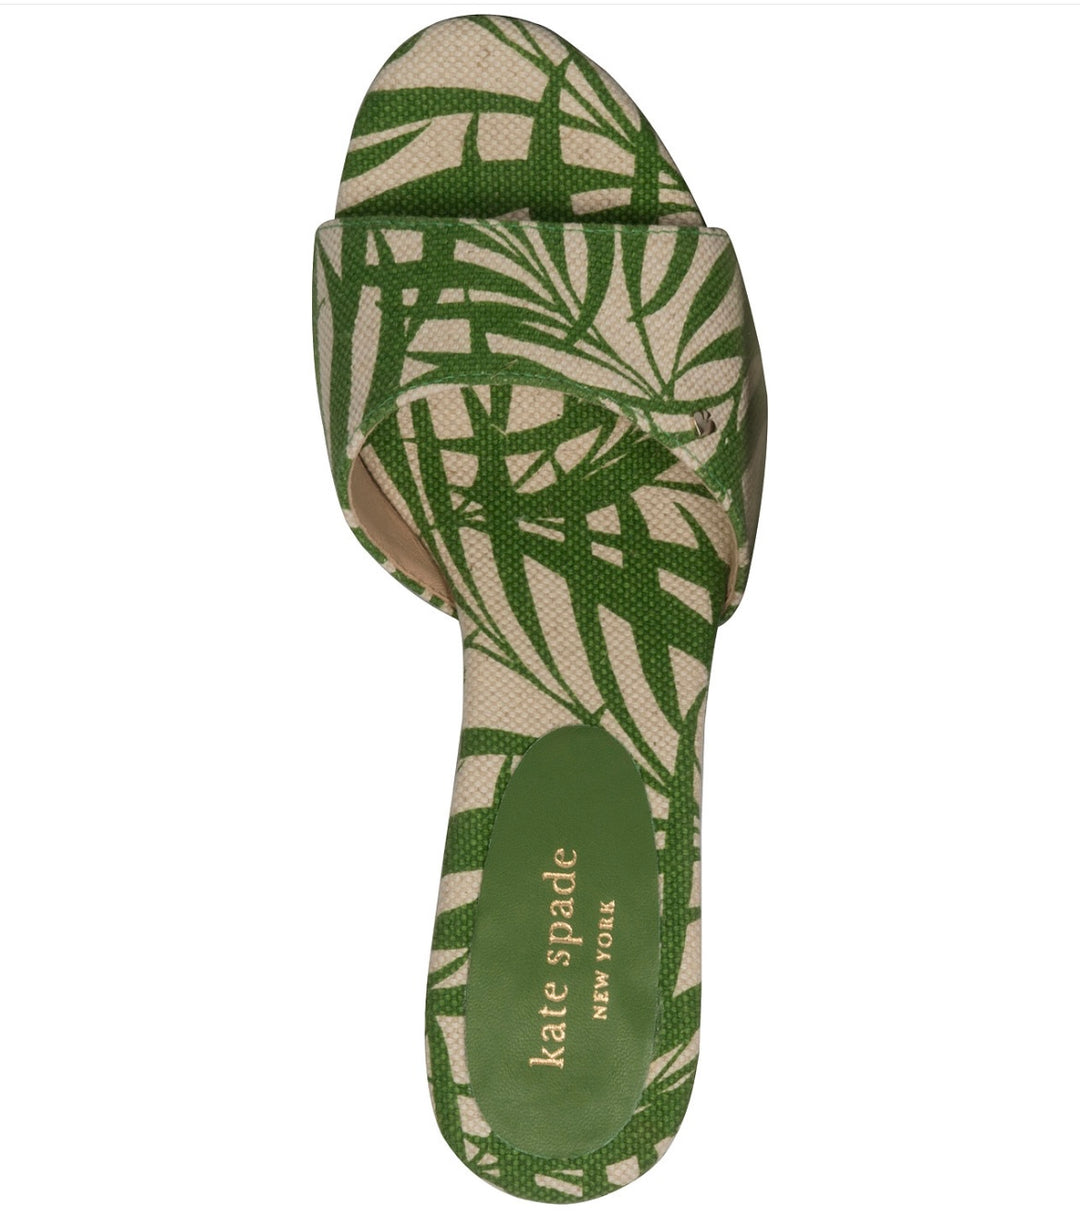 Kate Spade New York Women's Meena Slide Sandals Palm Fronds